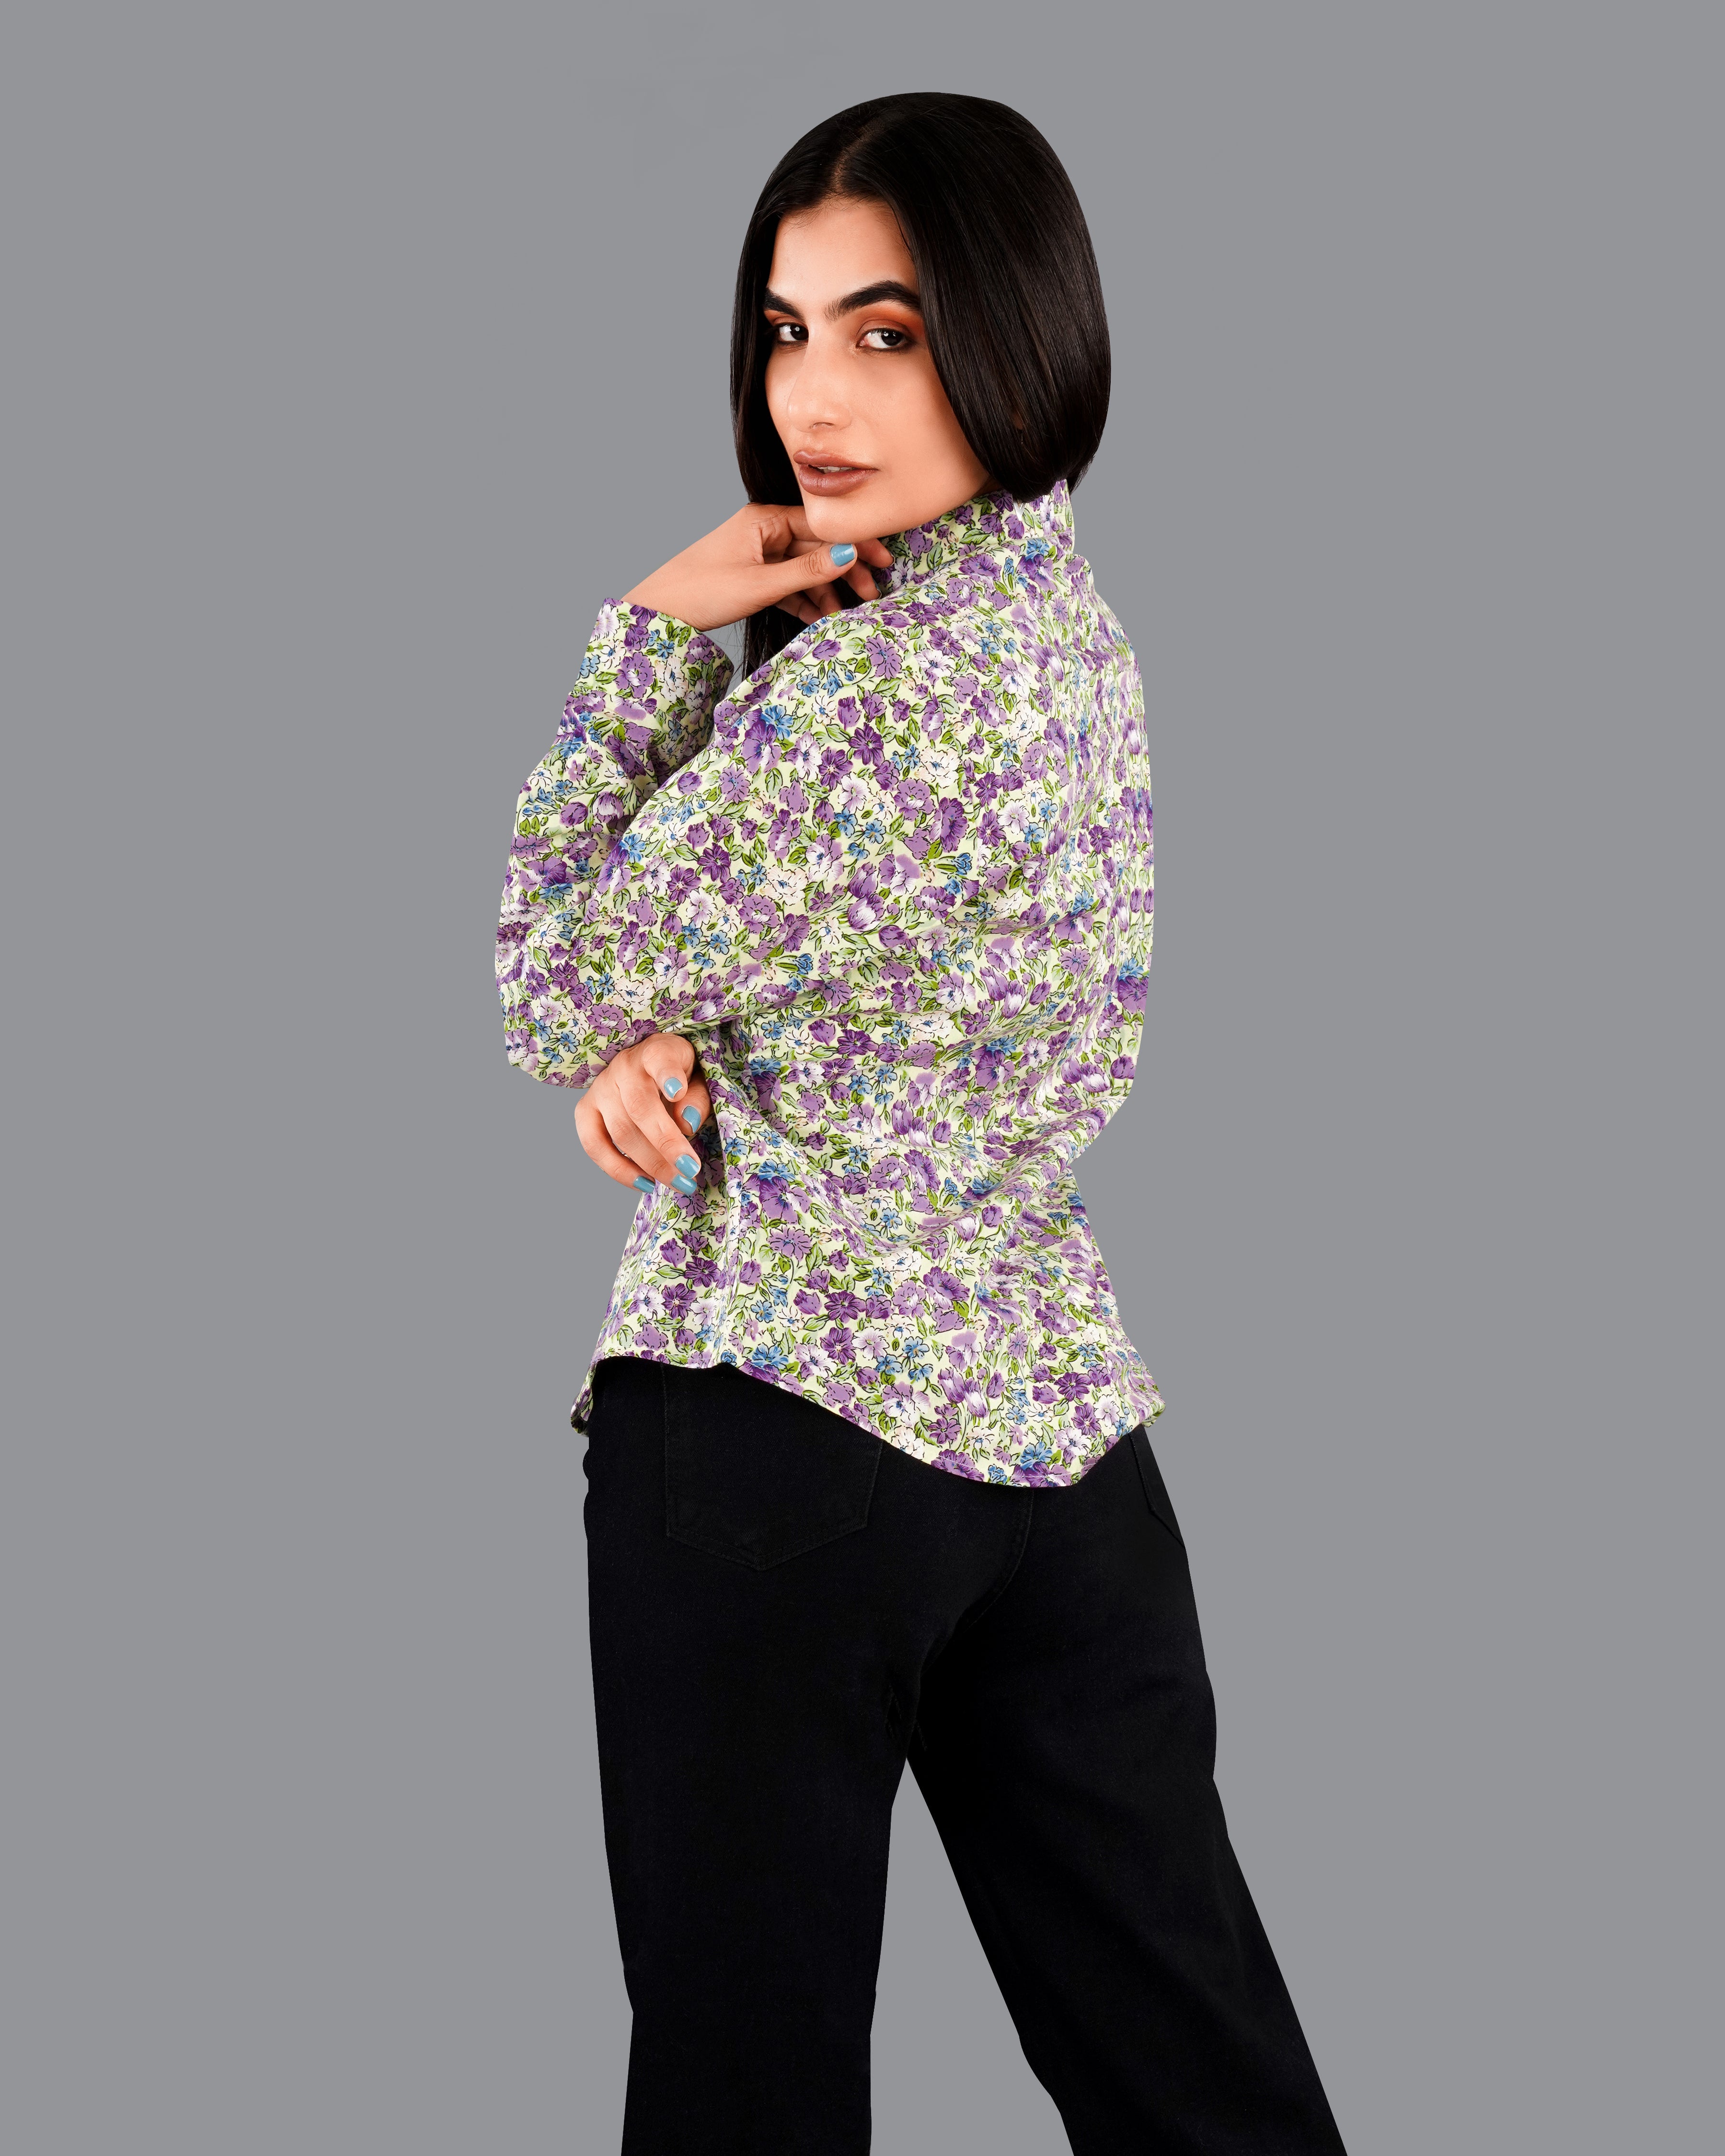 Tahuna Green with Wistteria Purple Floral Printed Premium Cotton Shirt WS041-M-32, WS041-M-34, WS041-M-36, WS041-M-38, WS041-M-40, WS041-M-42